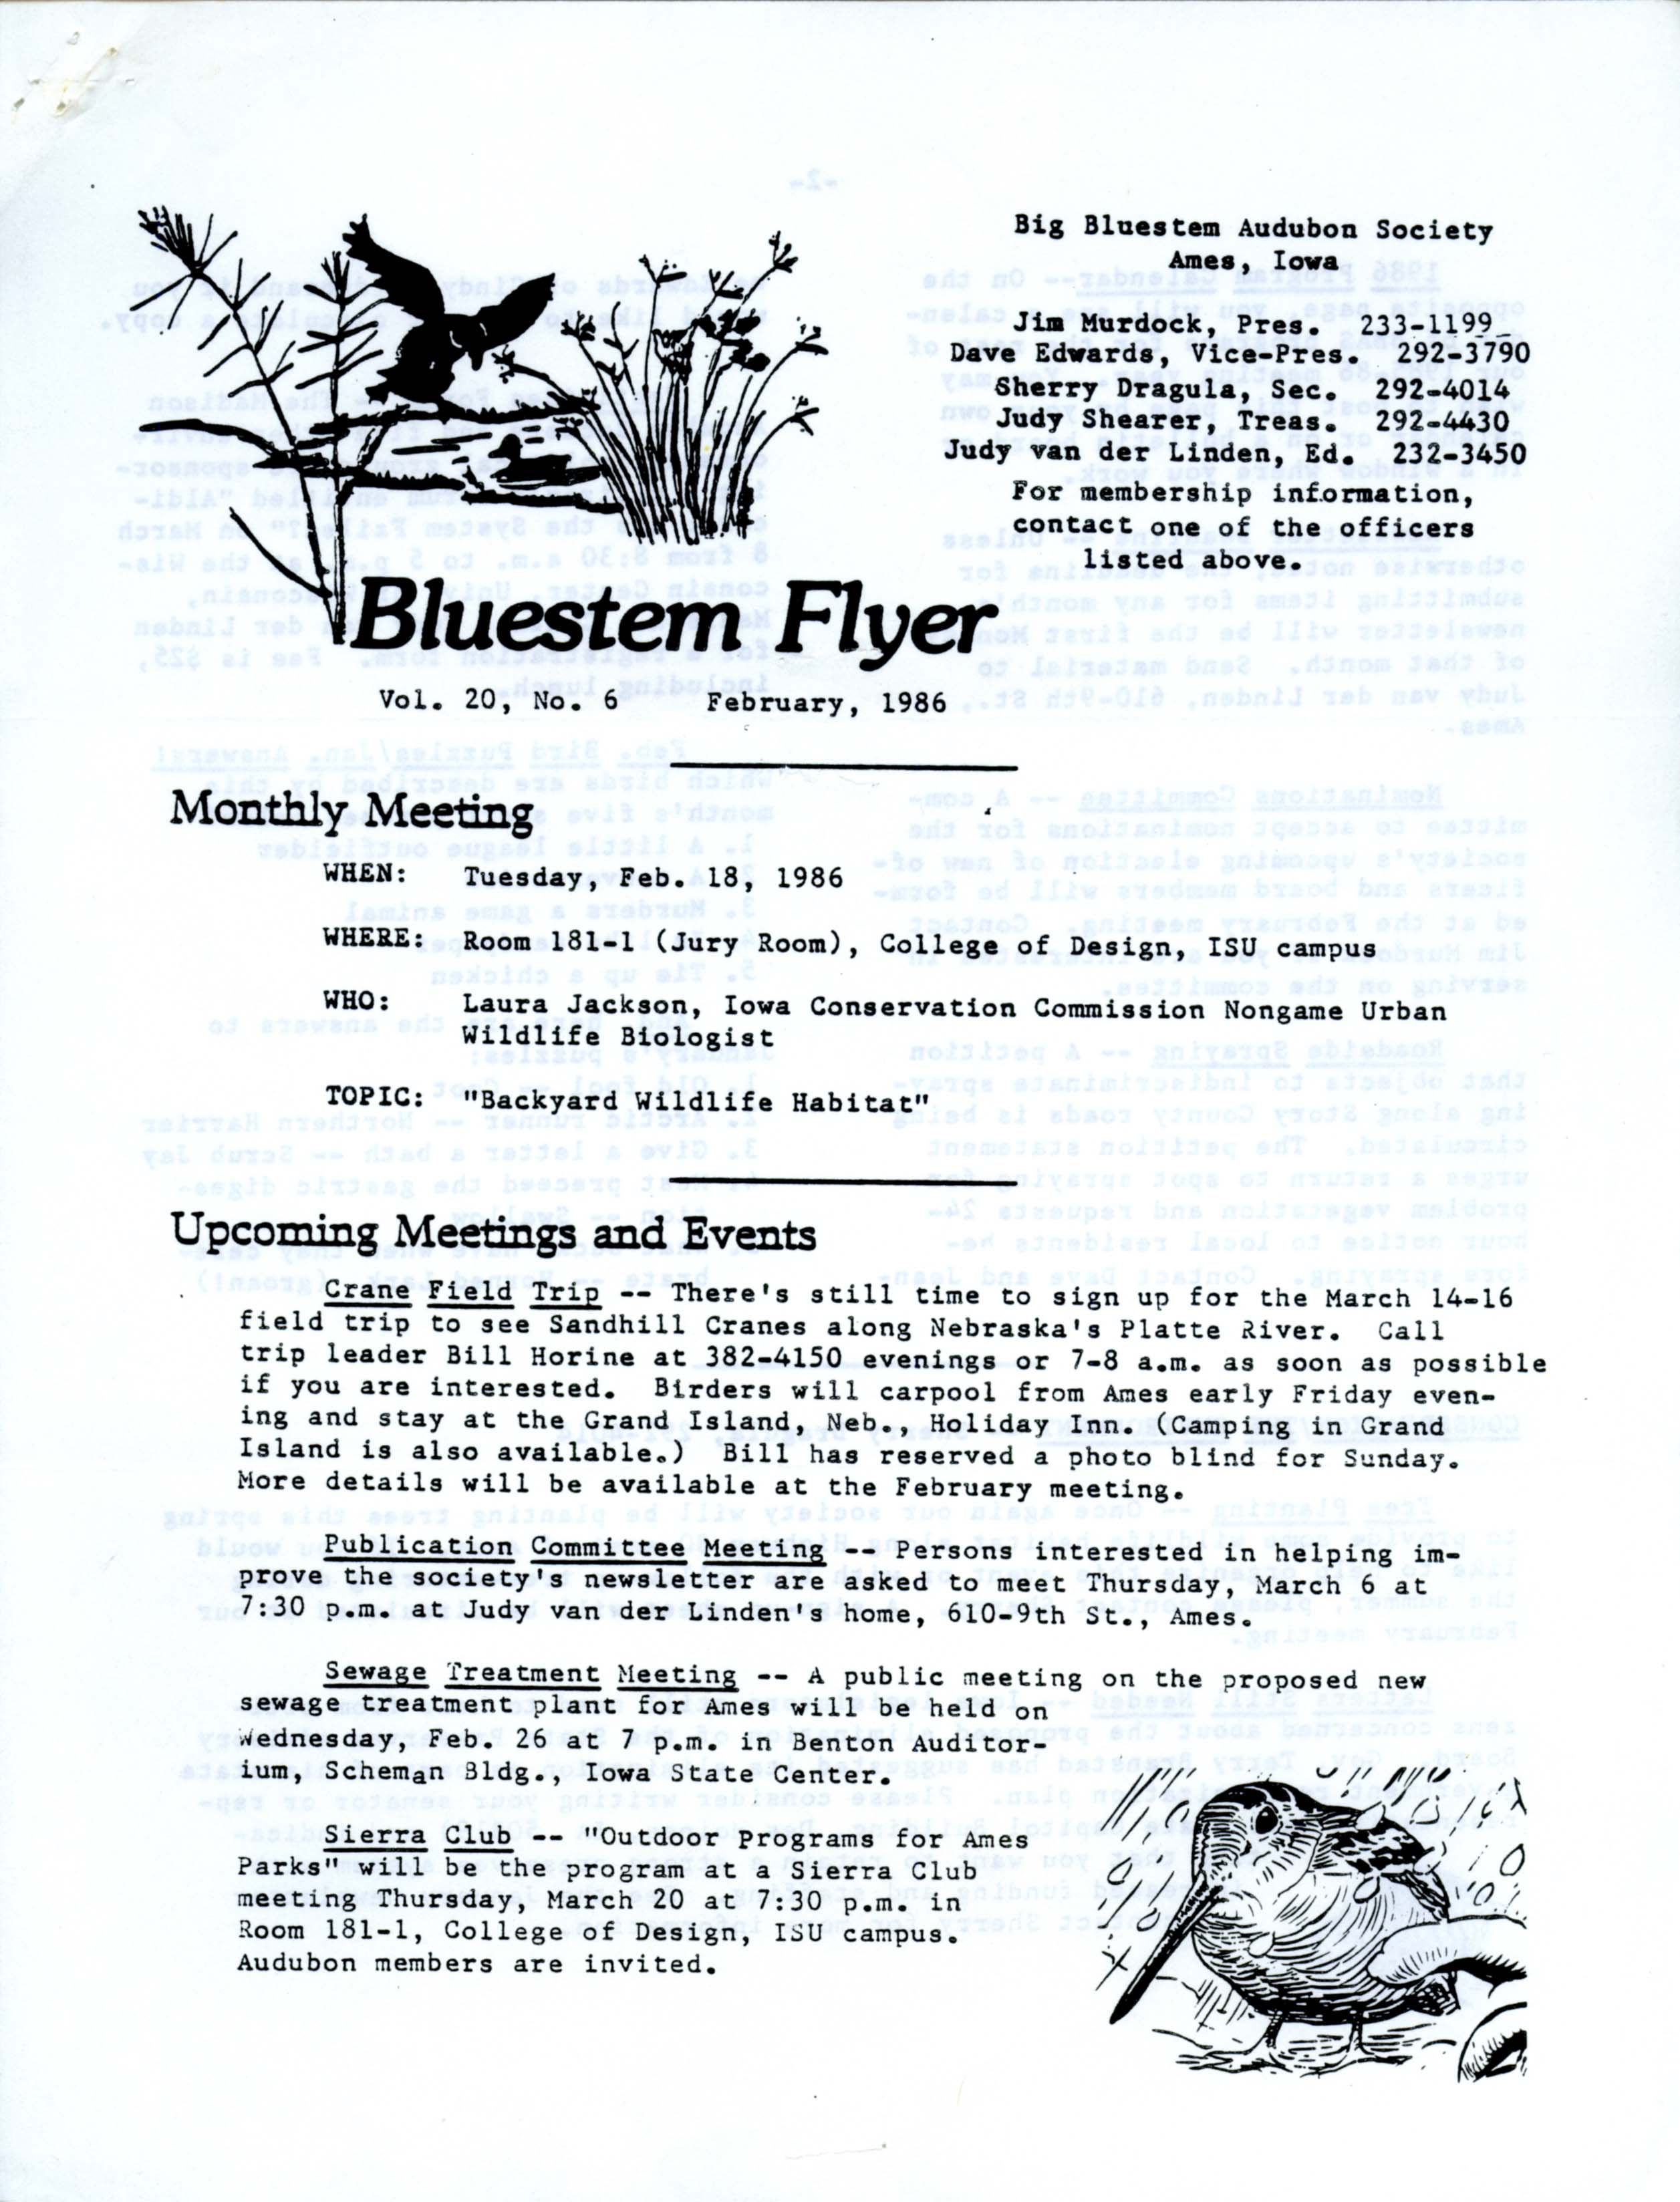 Bluestem Flyer, Volume 20, Number 6, February 1986